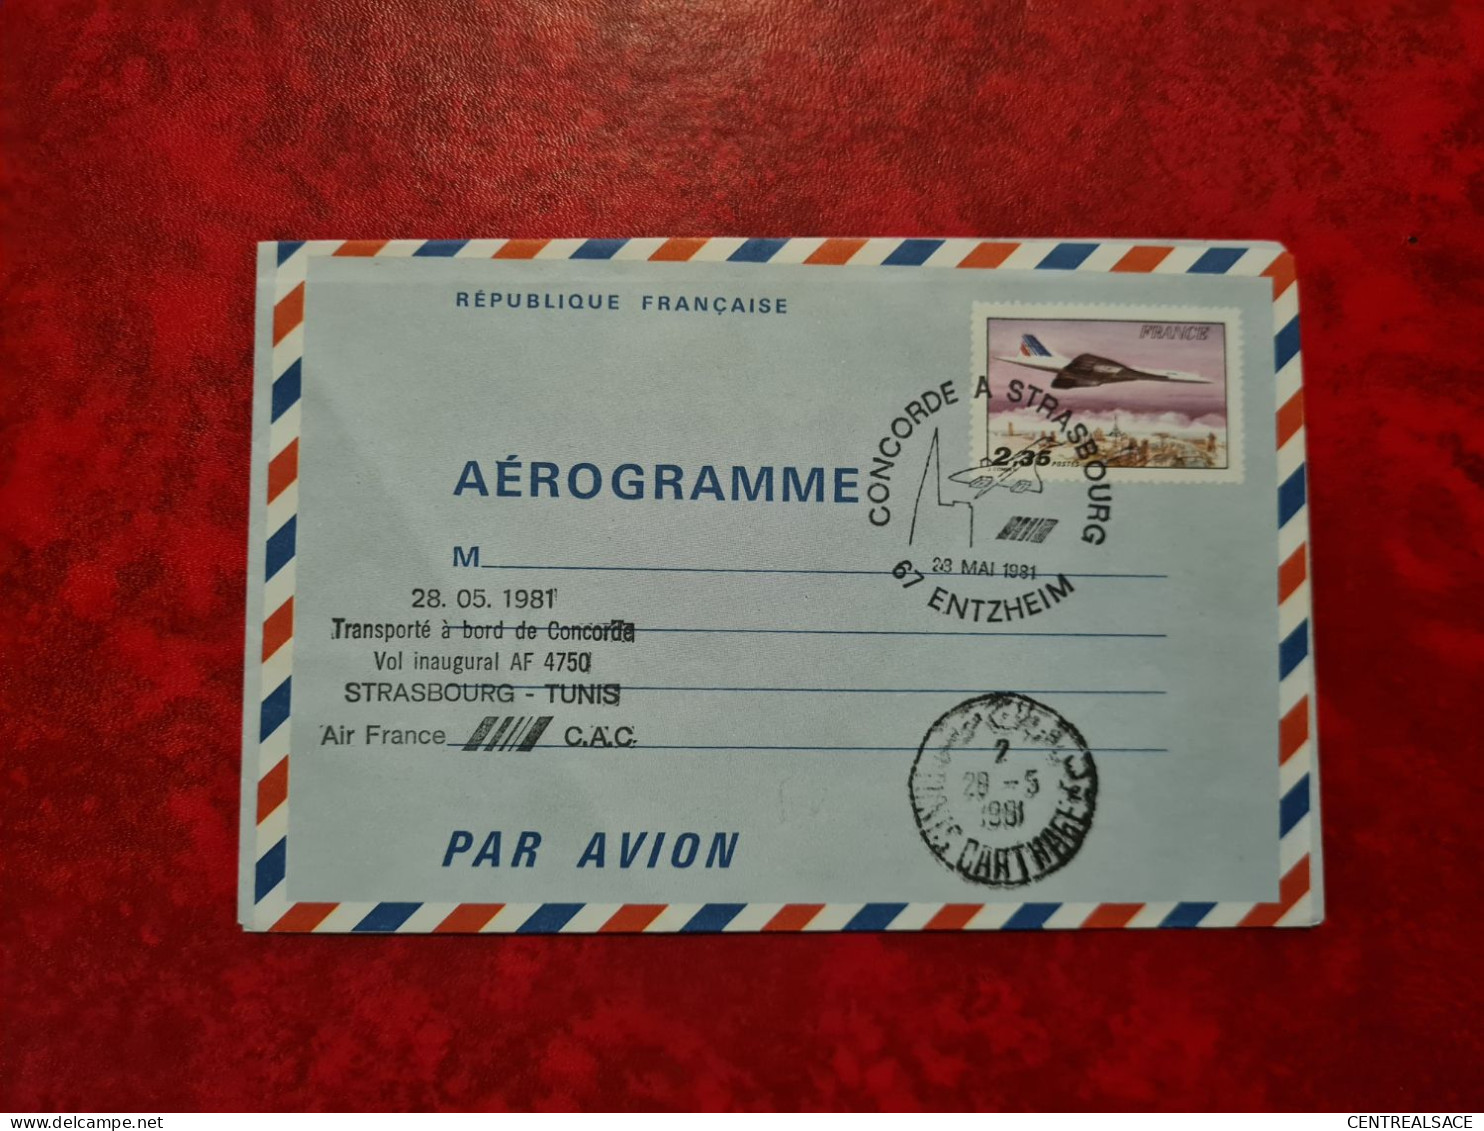 AEROGRAMME 1981 CONCORDE A STRASBOURG ENTZHEIM VOL INAUGURAL STRASBOURG TUNIS - Aérogrammes